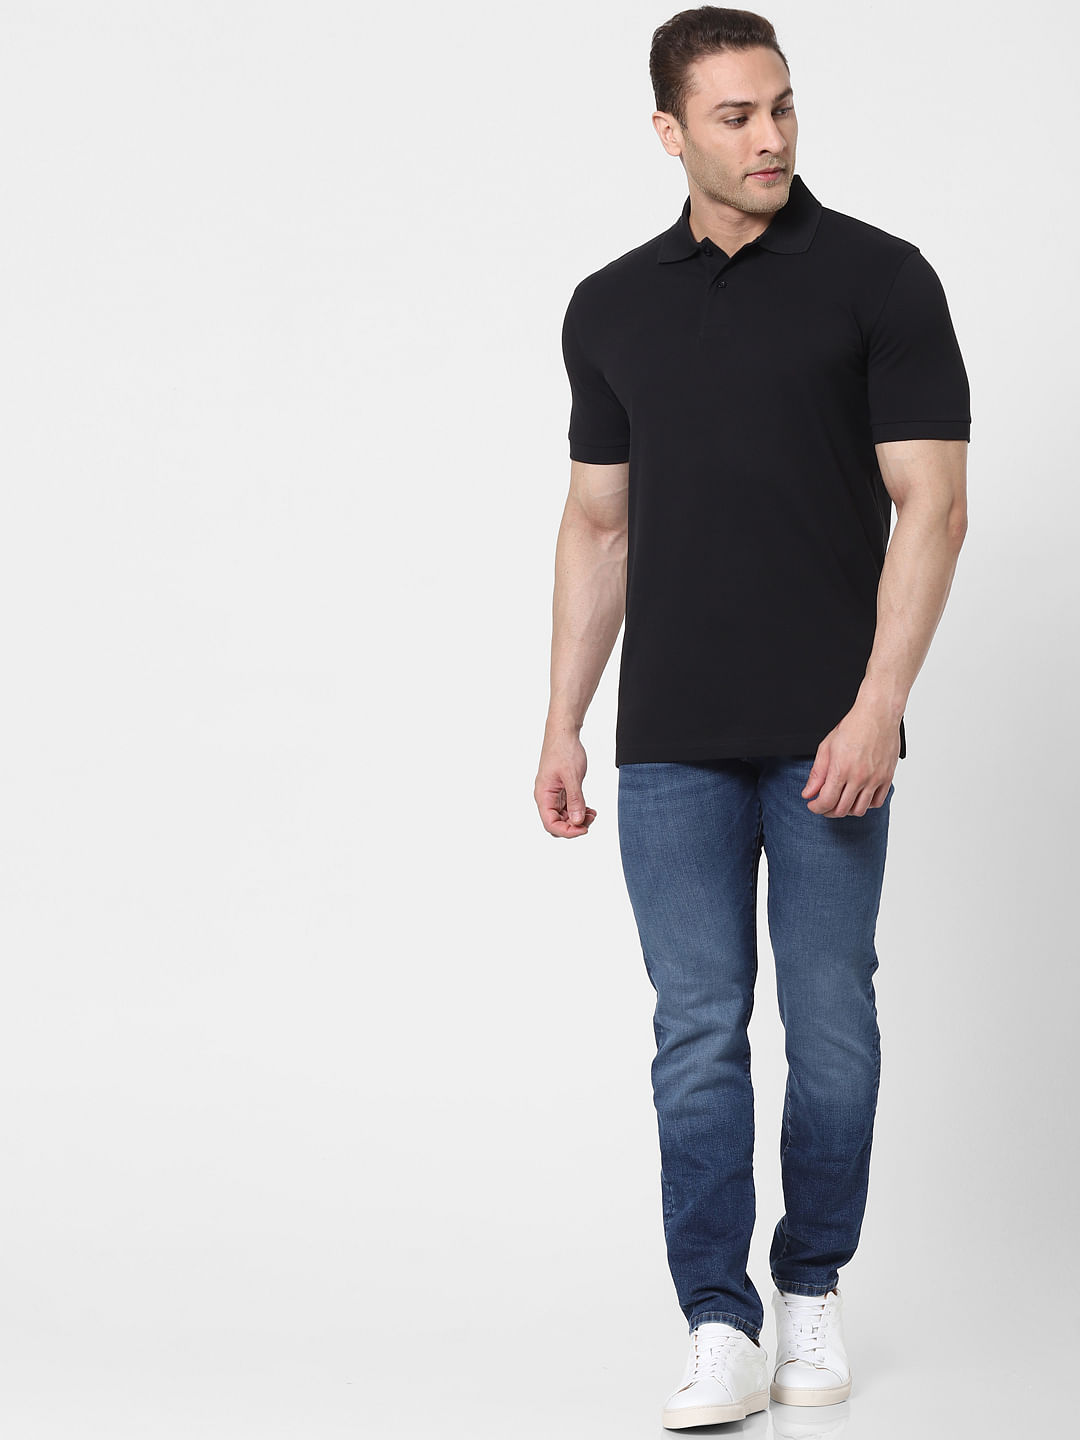 Amazoncom PJ PAUL JONES Mens Short Sleeve Knit Button Polo Shirts Lapel  Collar Knit Shirts Black S  Clothing Shoes  Jewelry